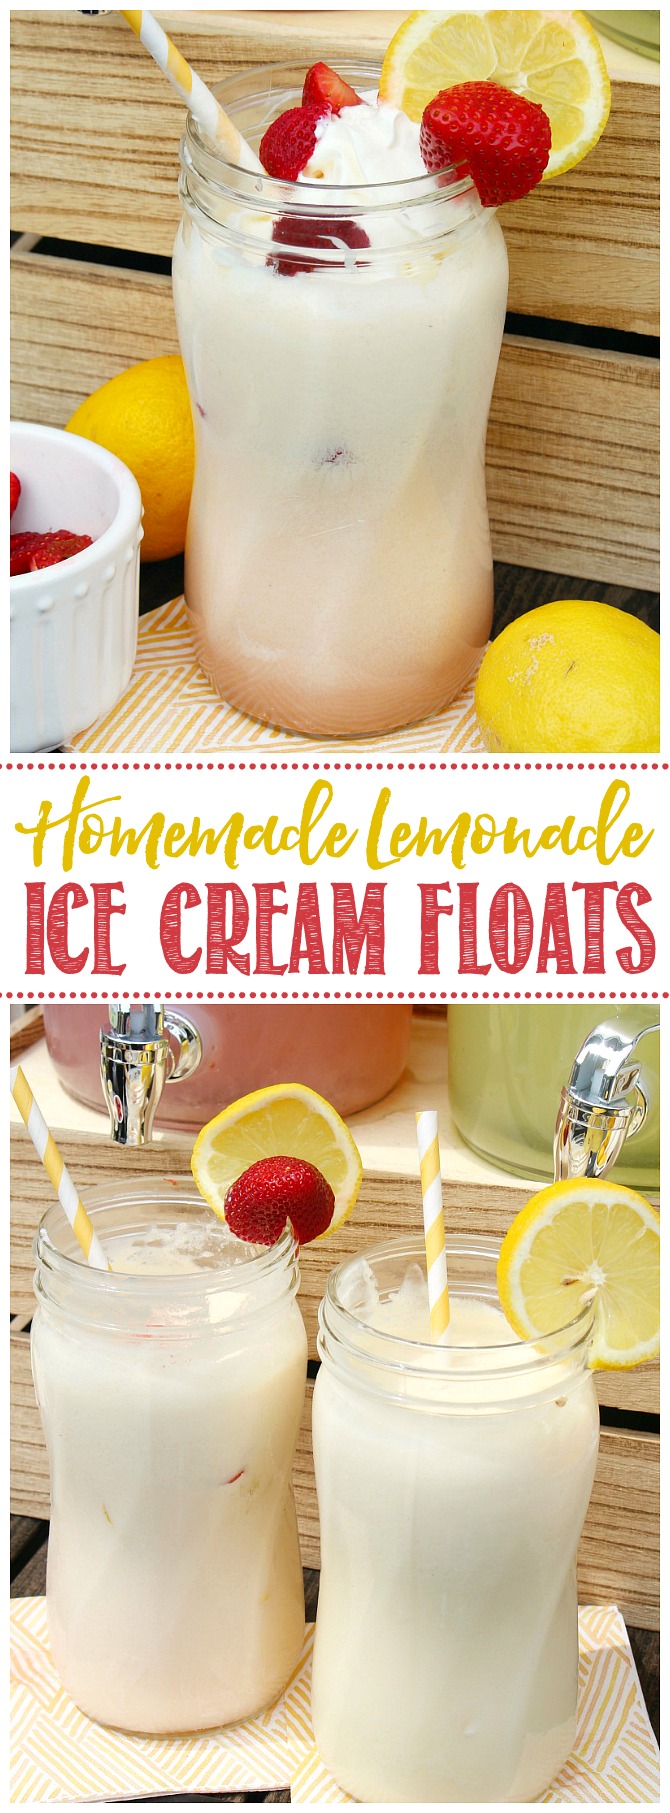 Homemade lemonade ice cream floats in mason jars.